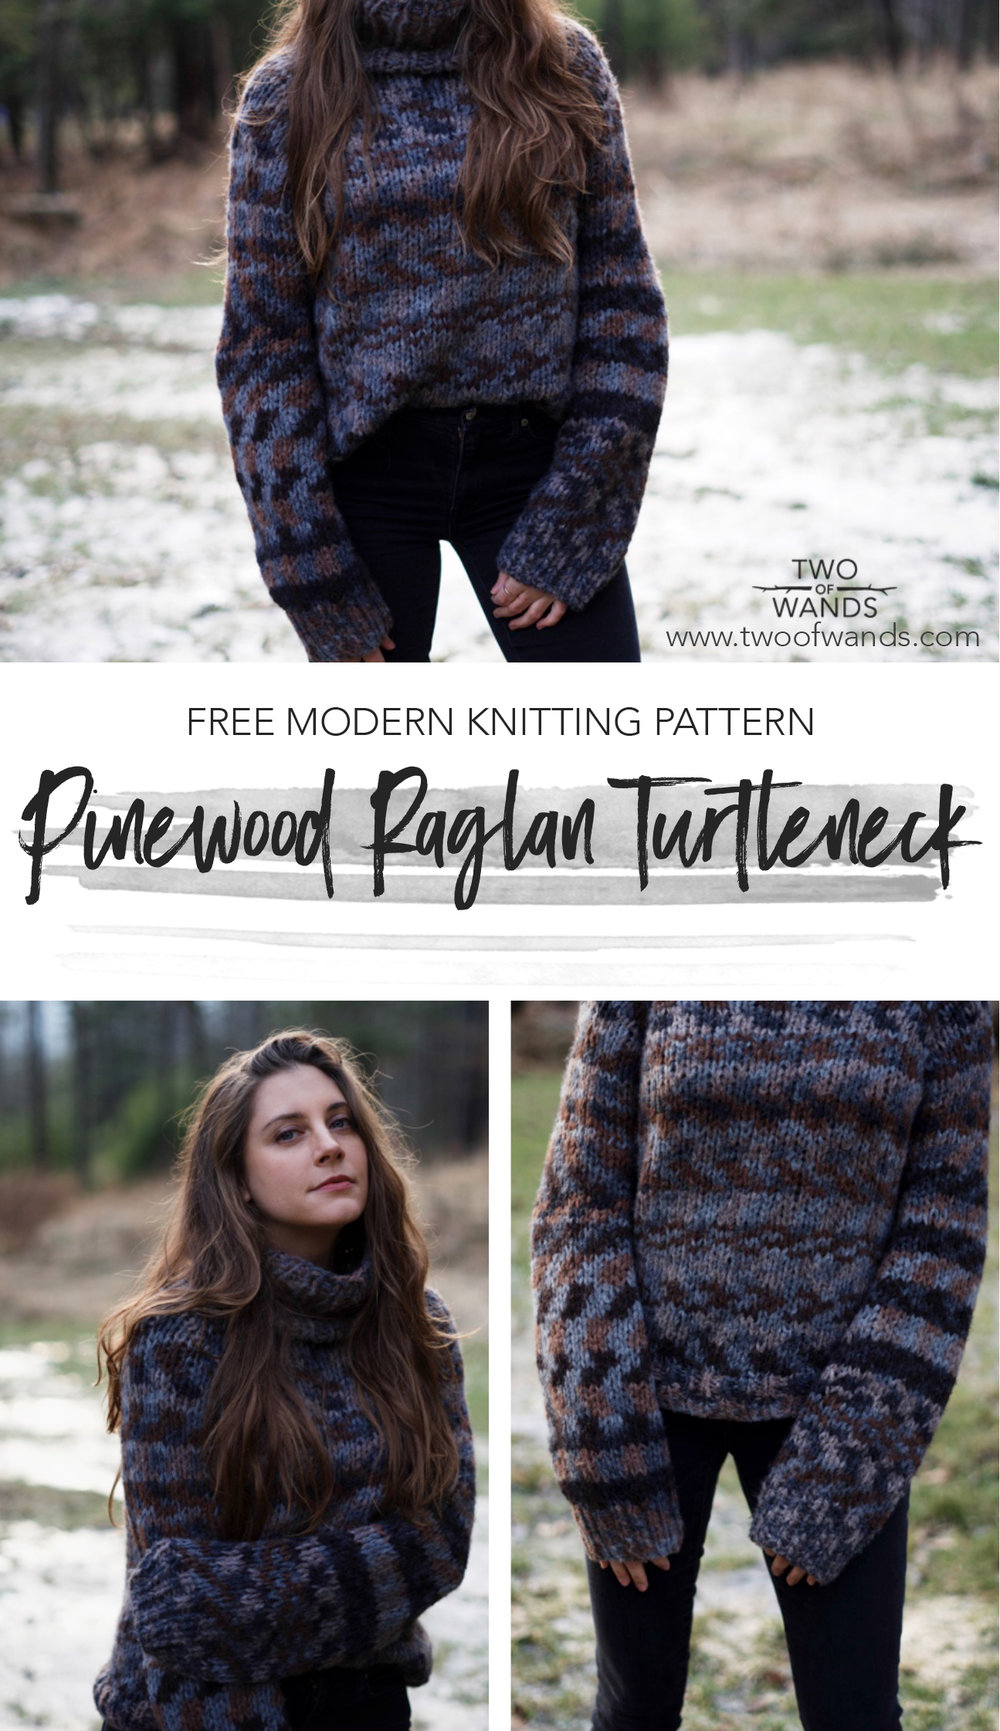 Pinewood Raglan Turtleneck pattern by Two of Wands